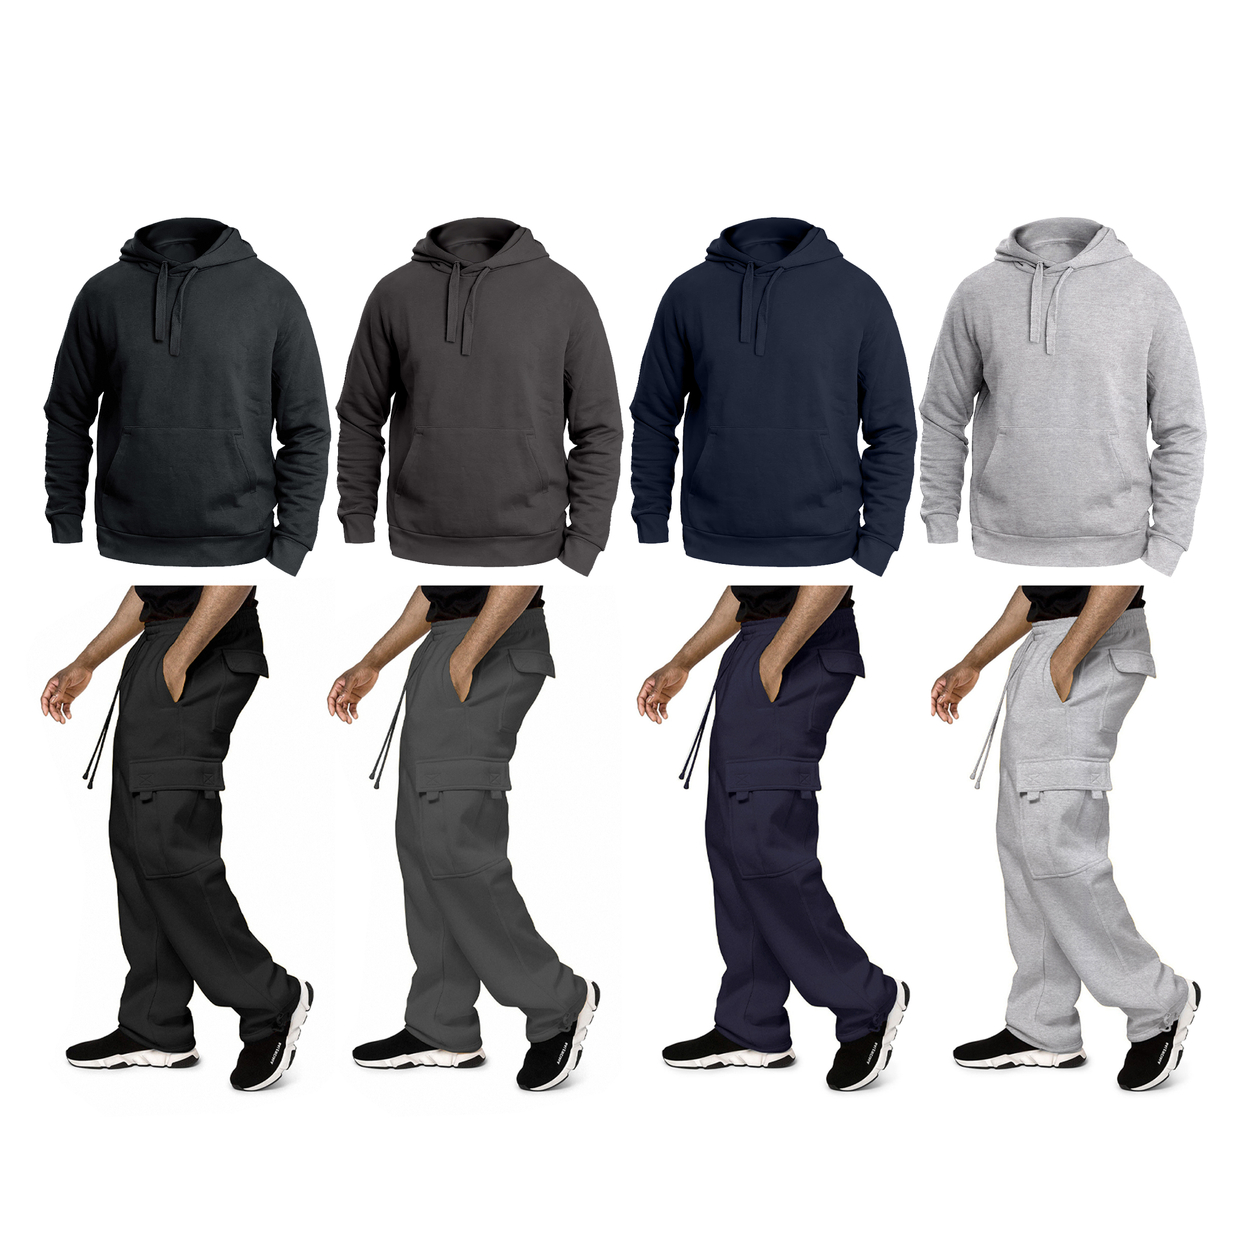 Multi-Pack: Big & Tall Men's Winter Warm Cozy Athletic Fleece Lined Multi-Pocket Cargo Sweatsuit - Grey, 1-pack, Xx-large